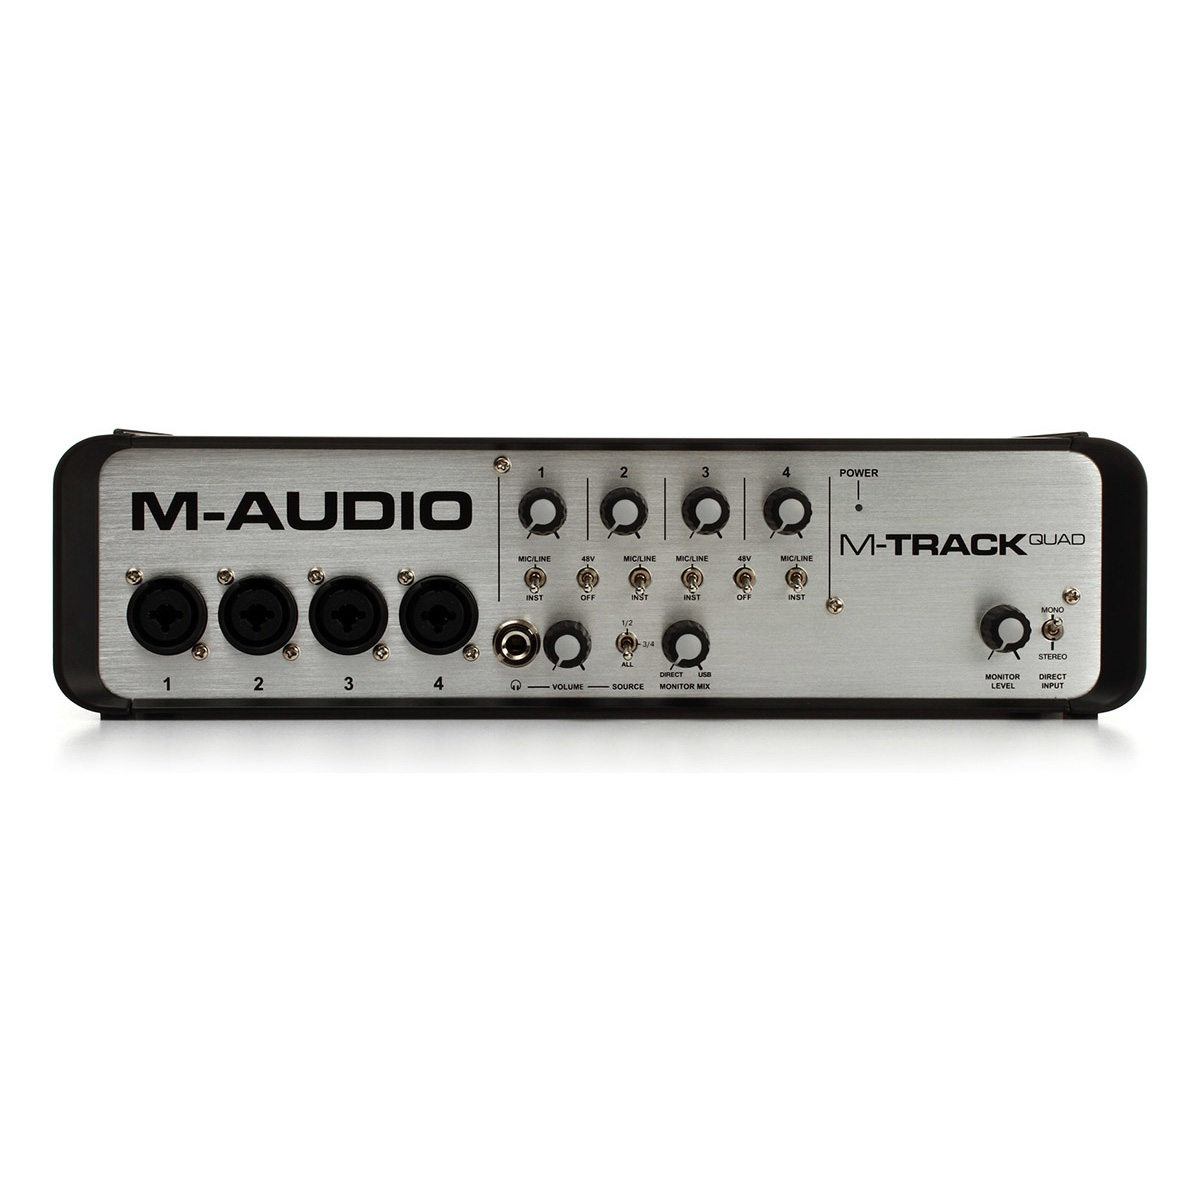 Картам m audio. Внешняя m Audio внешняя звуковая карта. M Audio track звуковая карта. Звуковая карта m-Audio m-track eight. USB аудиоинтерфейс m-Audio m-track Quad.